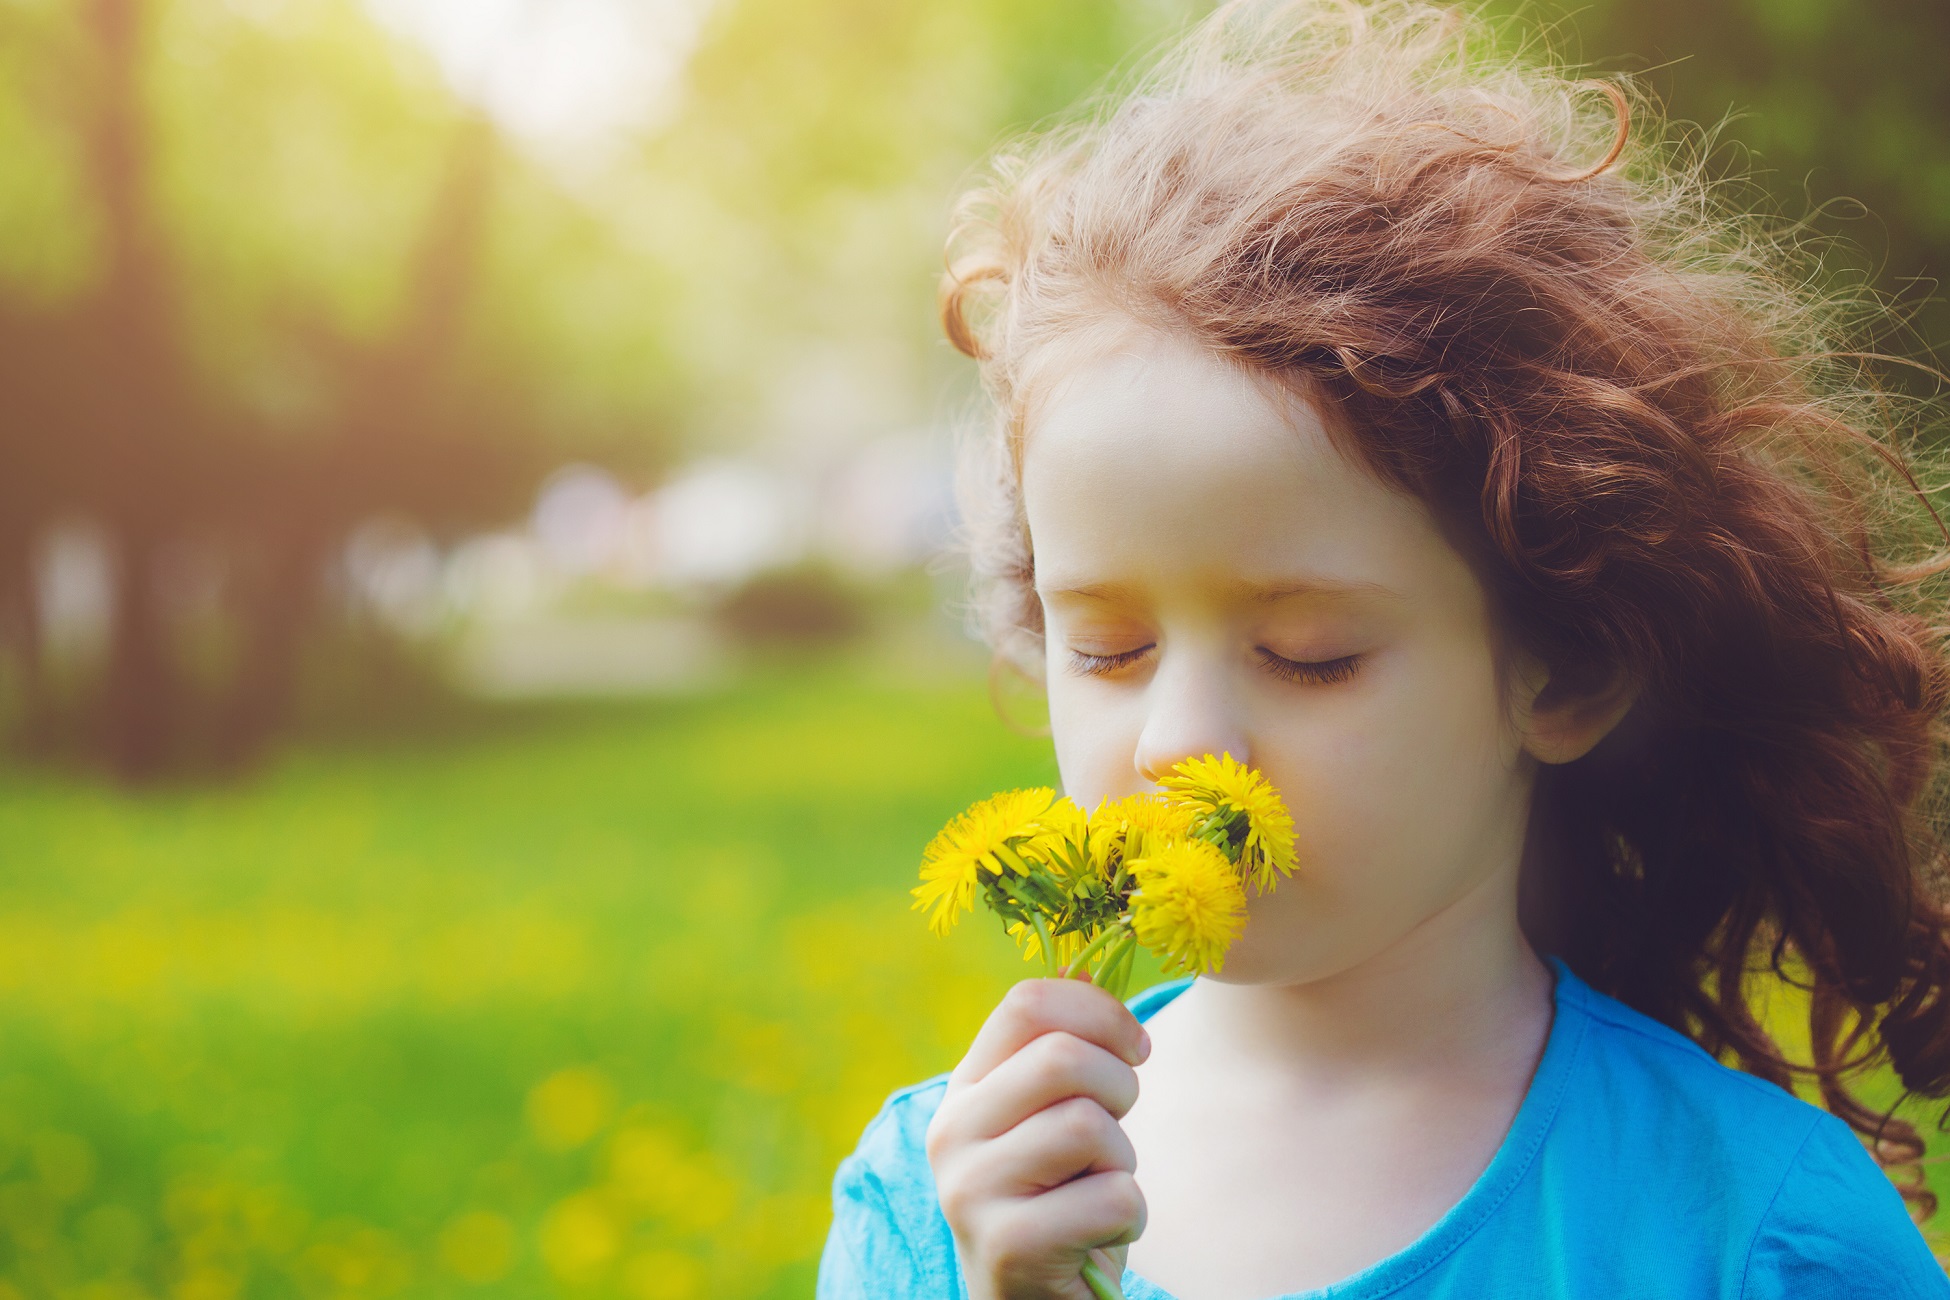 Des allergènes, comme les pollens, peuvent favoriser la crise d’asthme. © Yuliya Evstratenko, Shutterstock